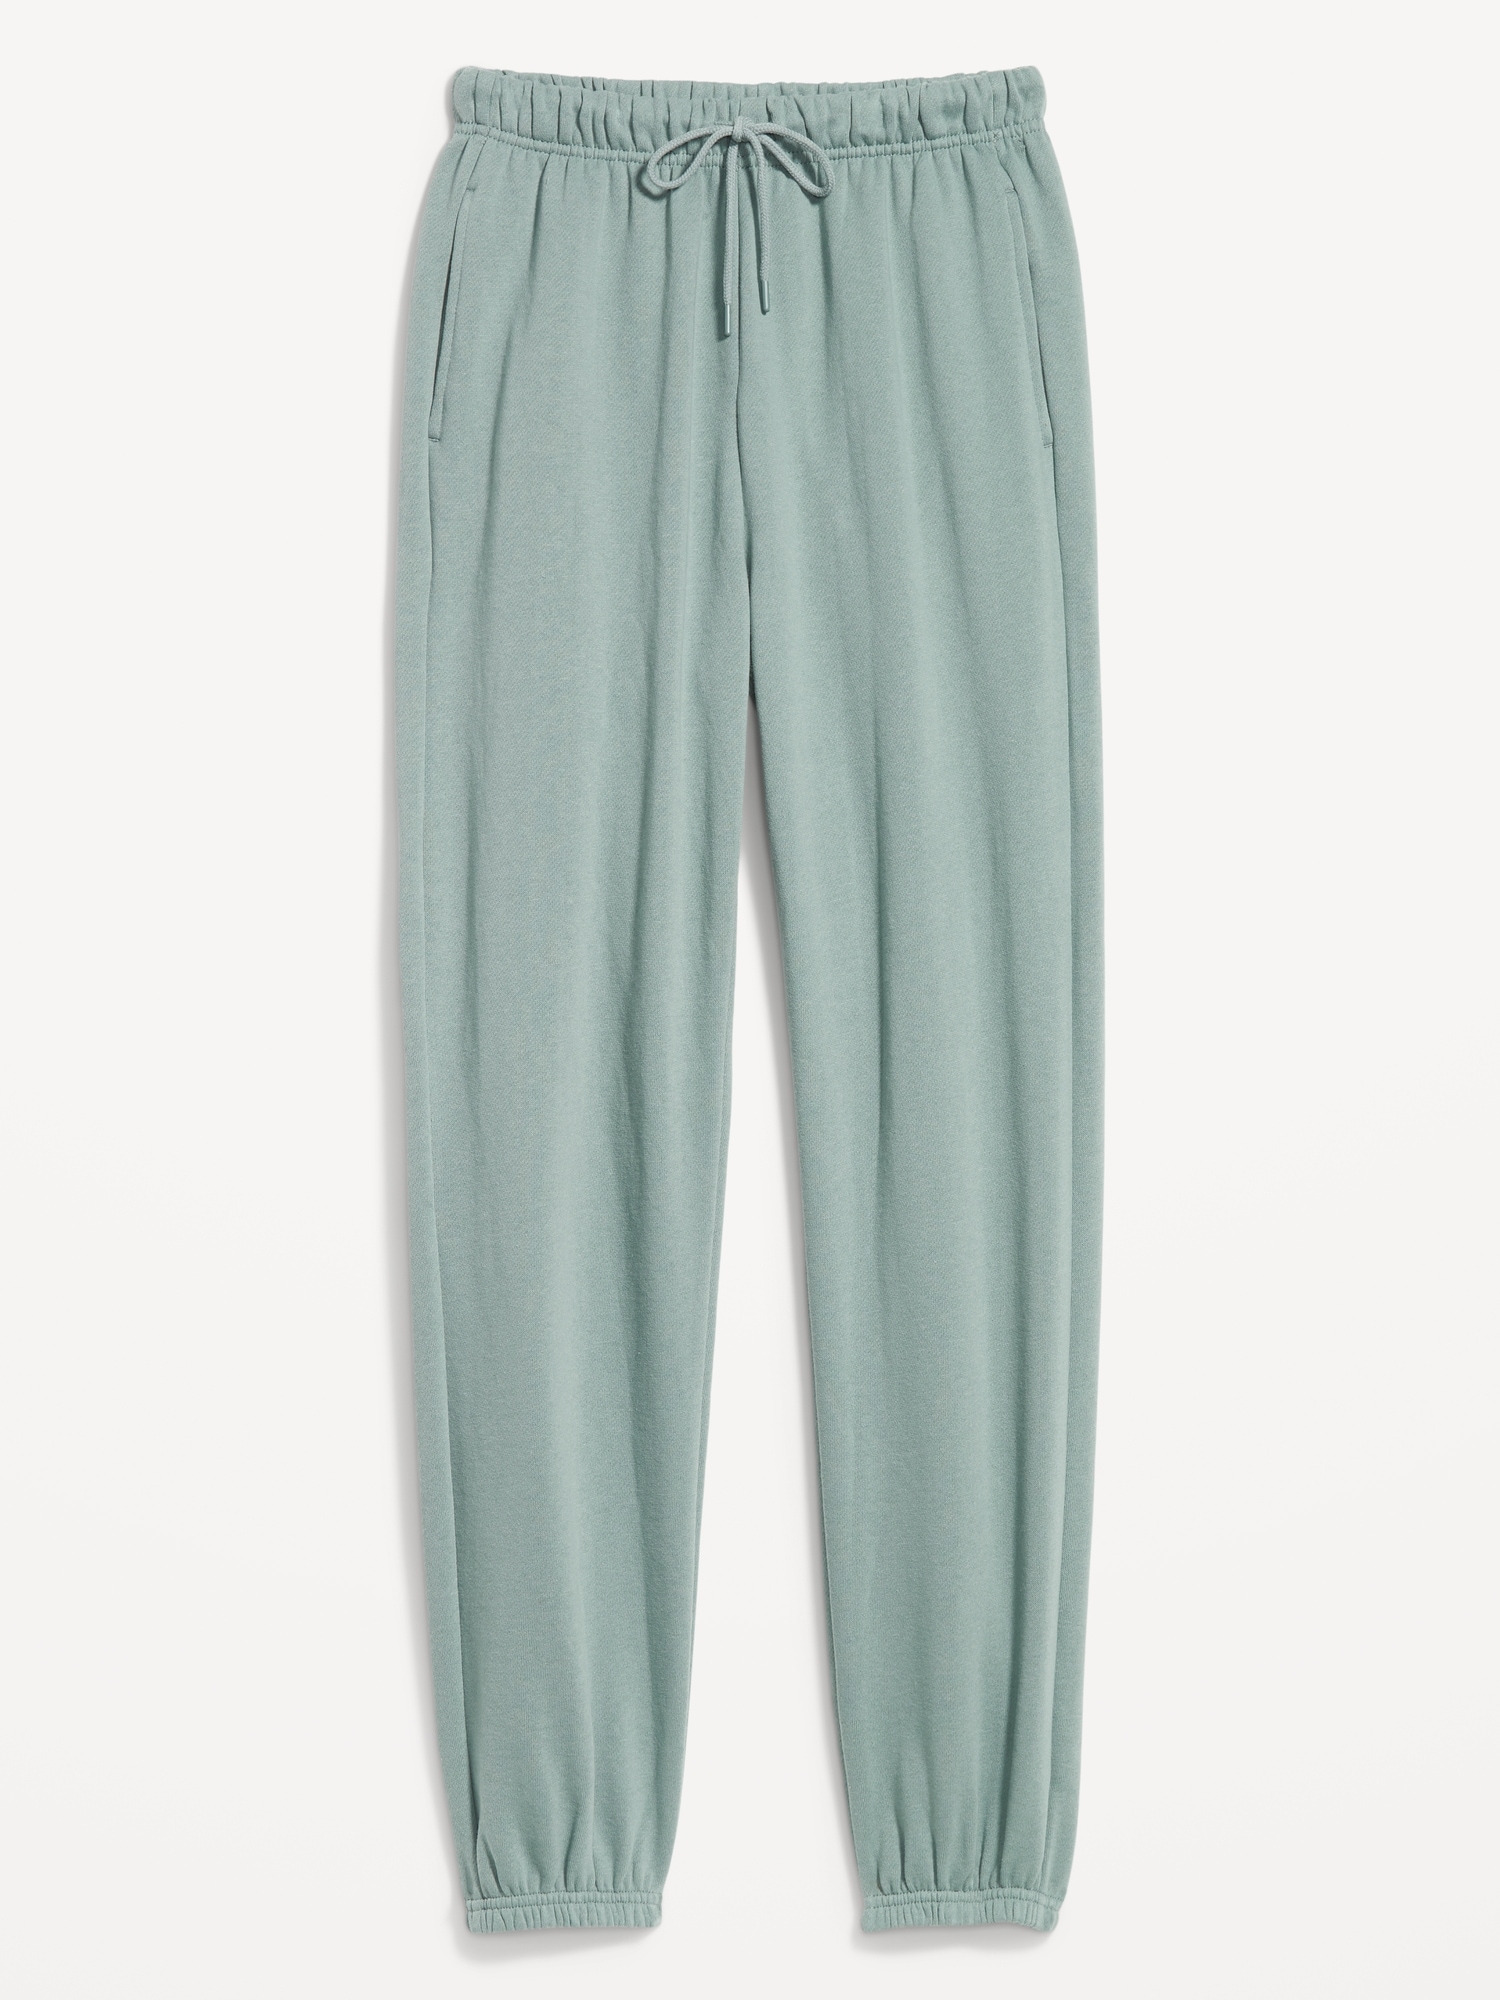 SweatyRocks Women's High Waisted Soft Slim Casual Pants Solid